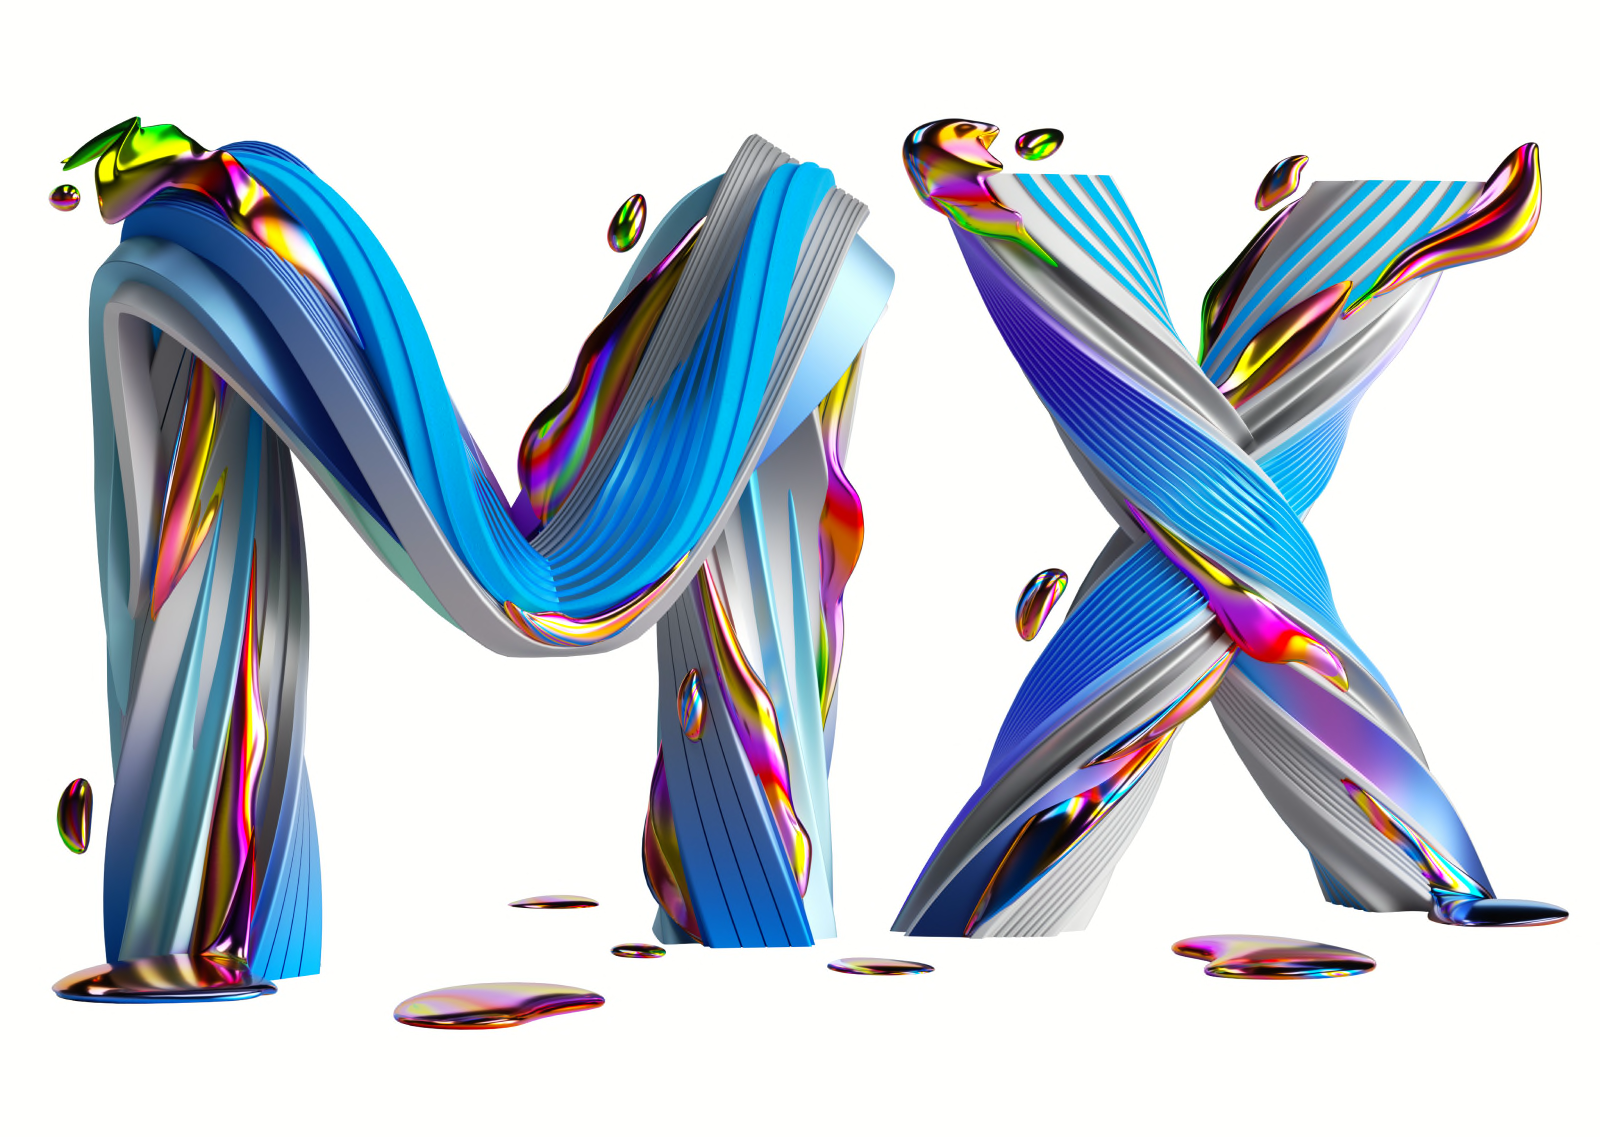 Ikona serii MX